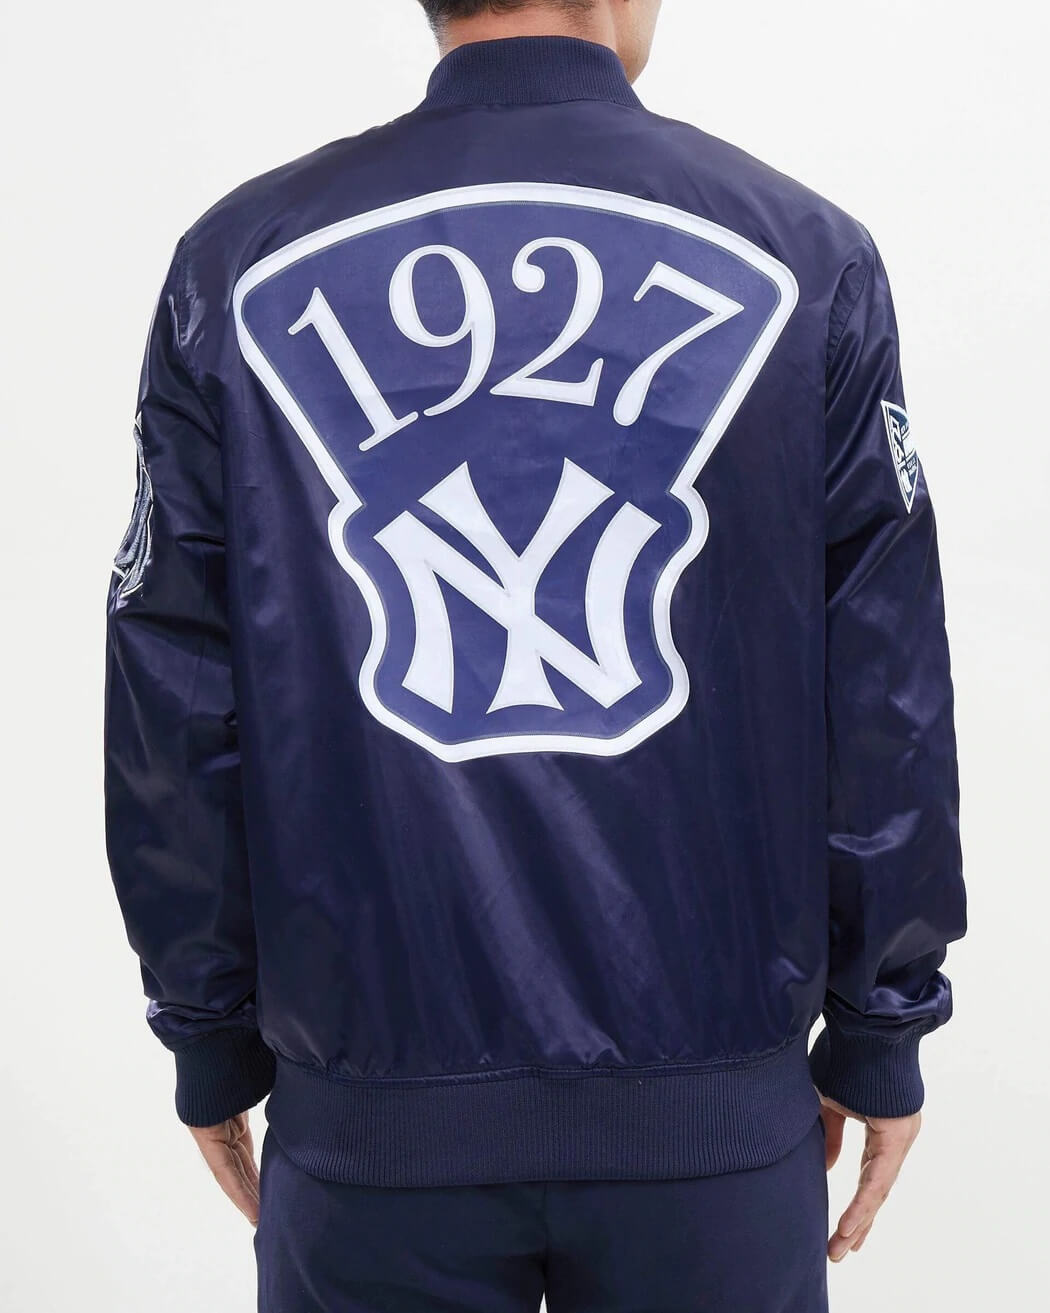 Maker of Jacket Fashion Jackets Pro Standard New York Yankees Navy Satin